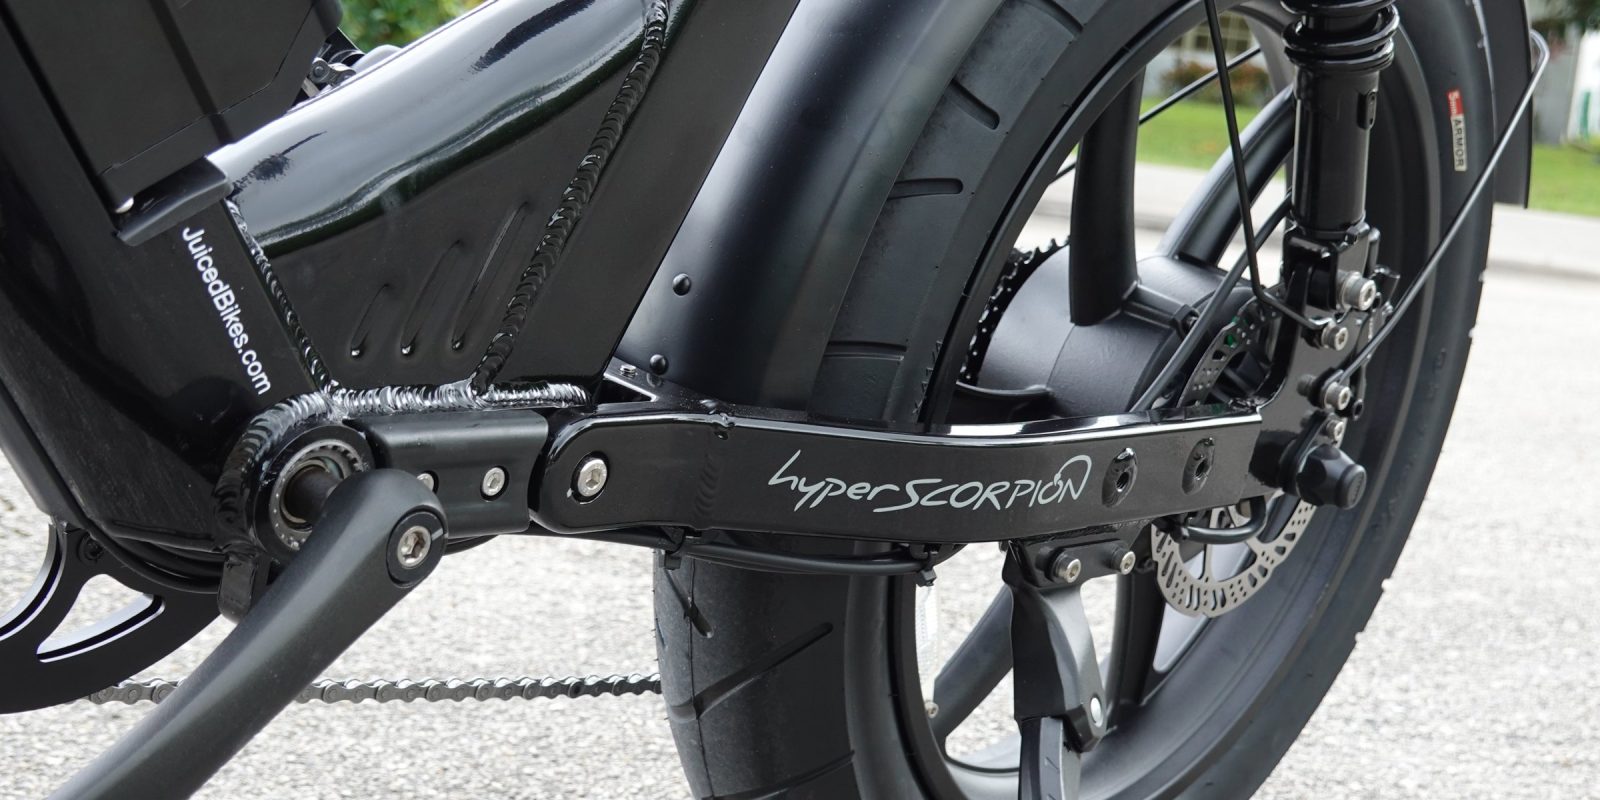 Juiced HyperScorpion electric bike